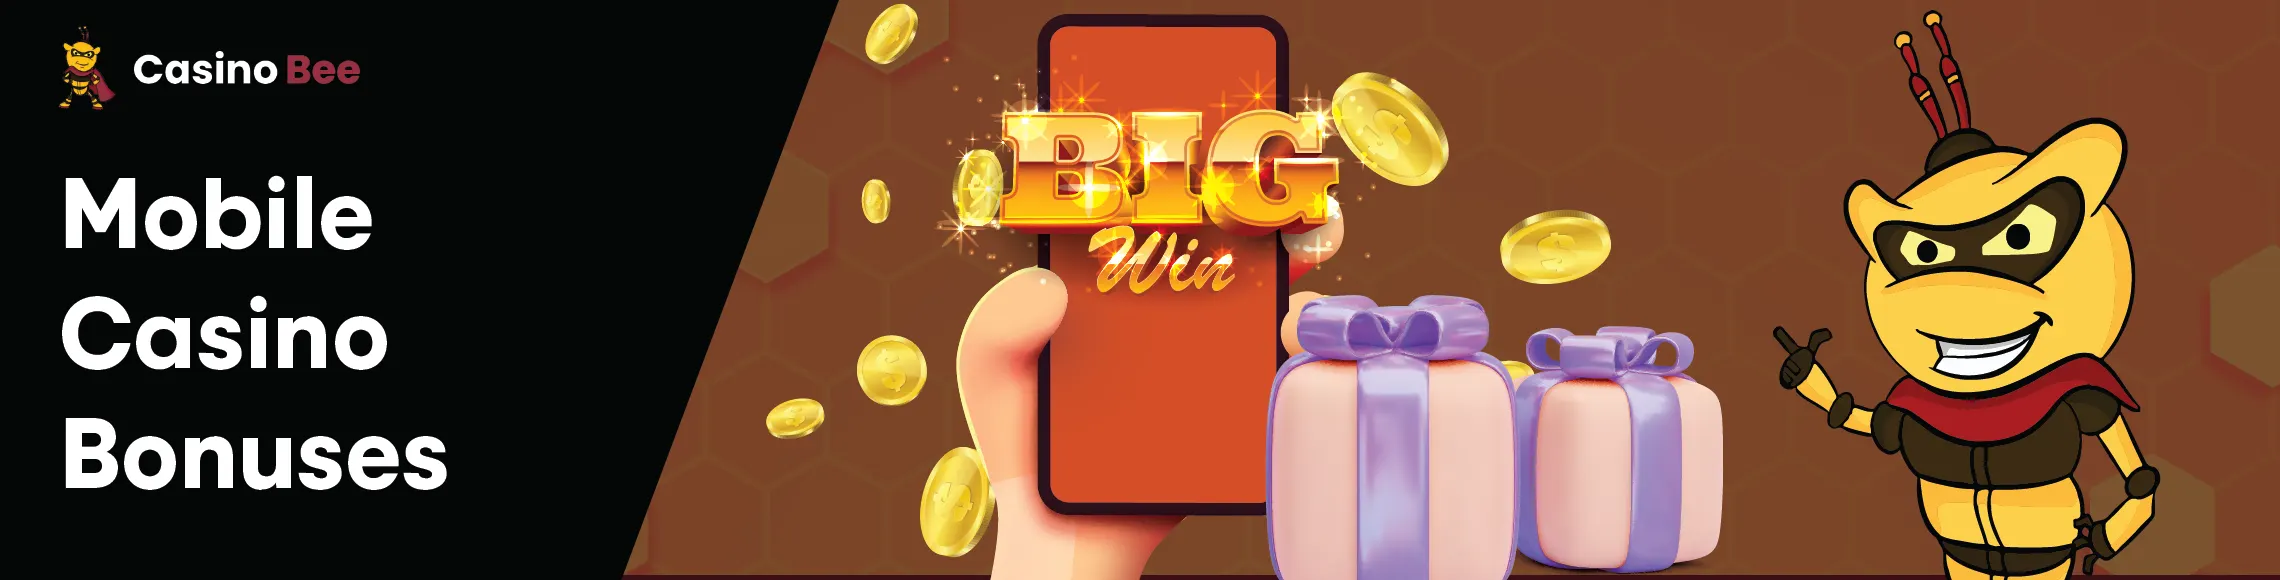 Mobile Casino Website and Mobile Casino Apps Bonuses
